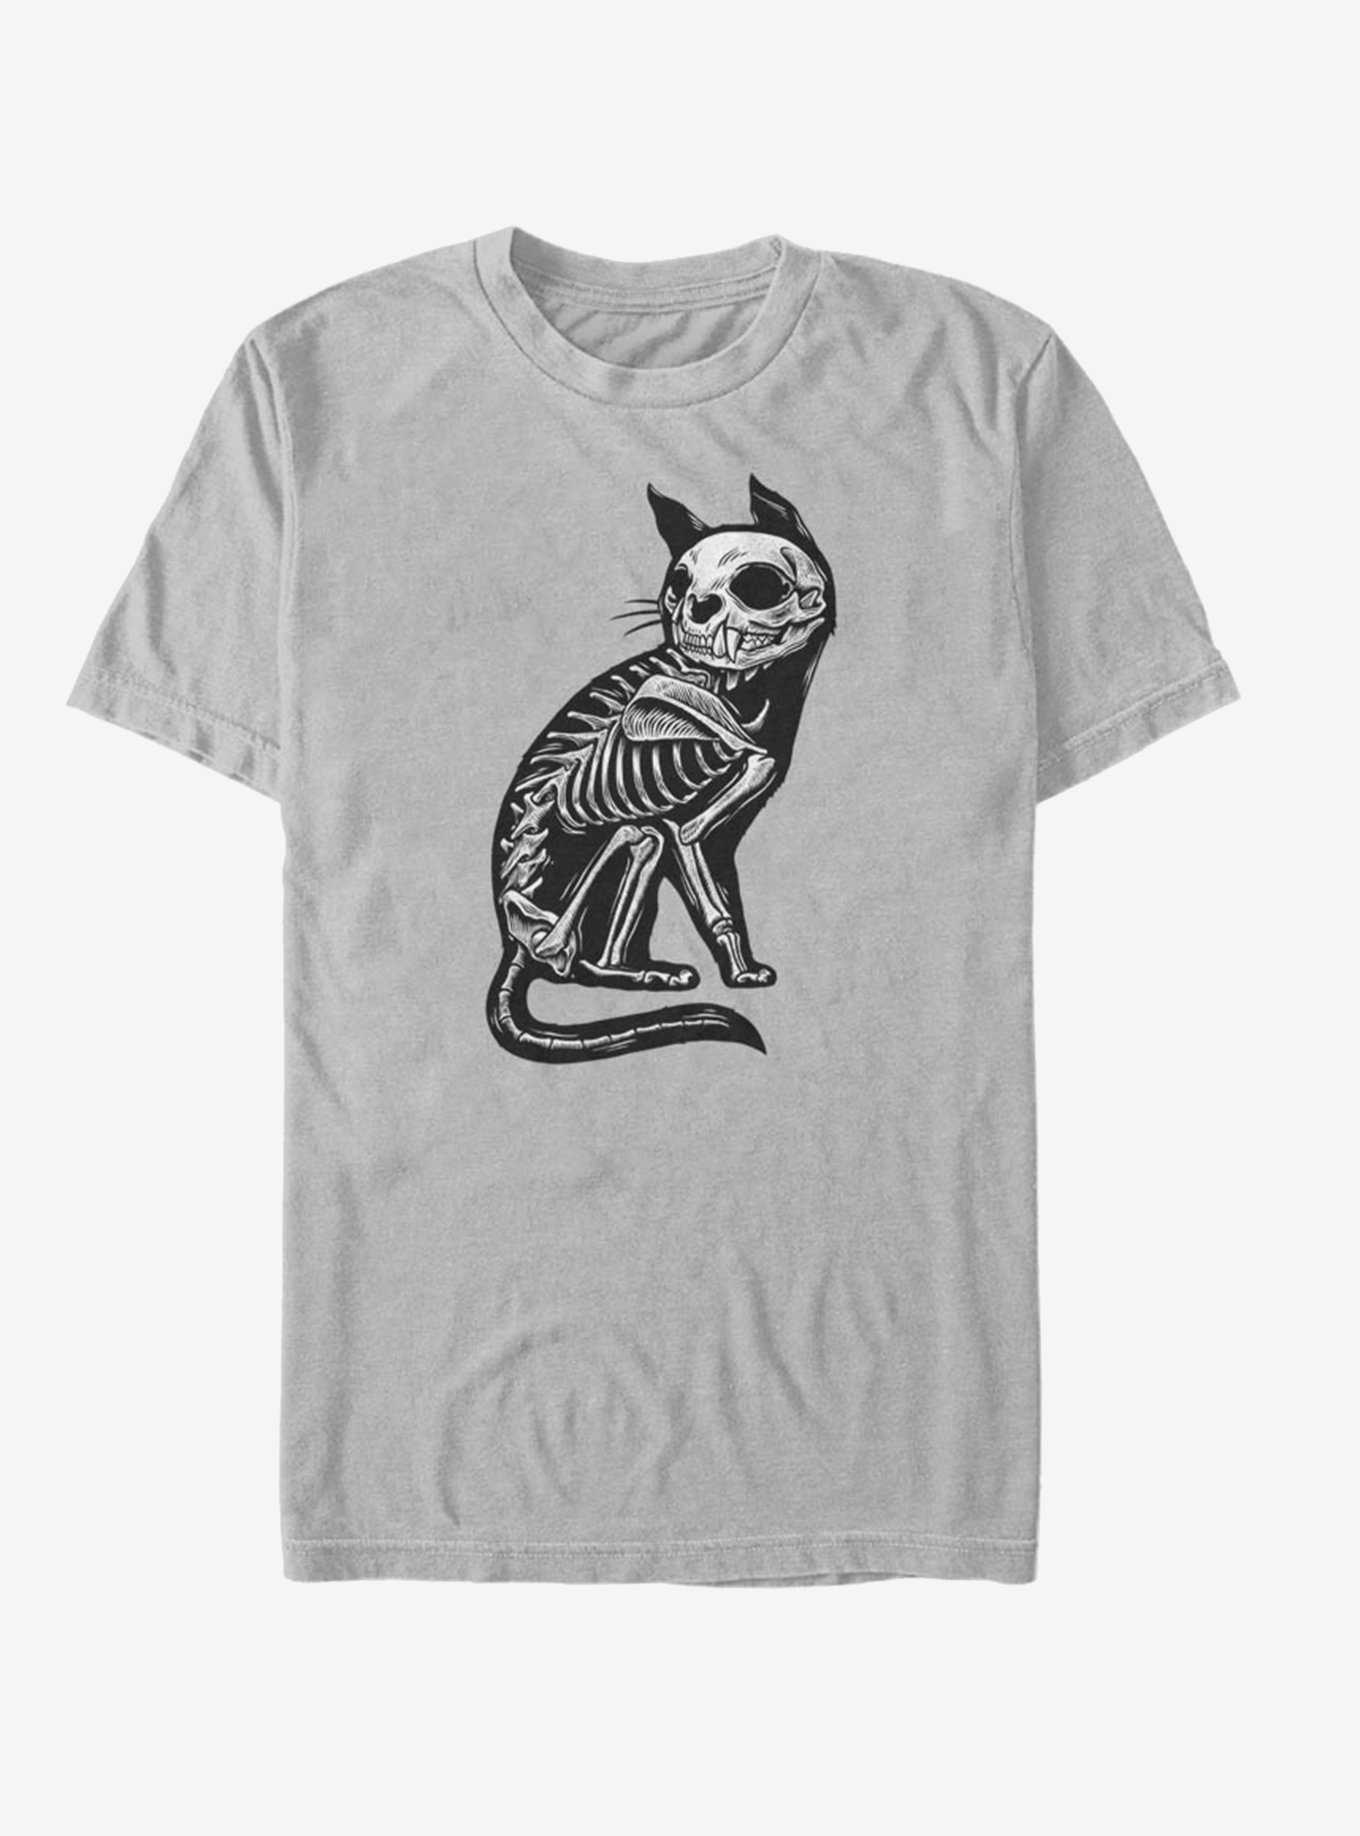 Cat X-Ray Skeleton T-Shirt, , hi-res